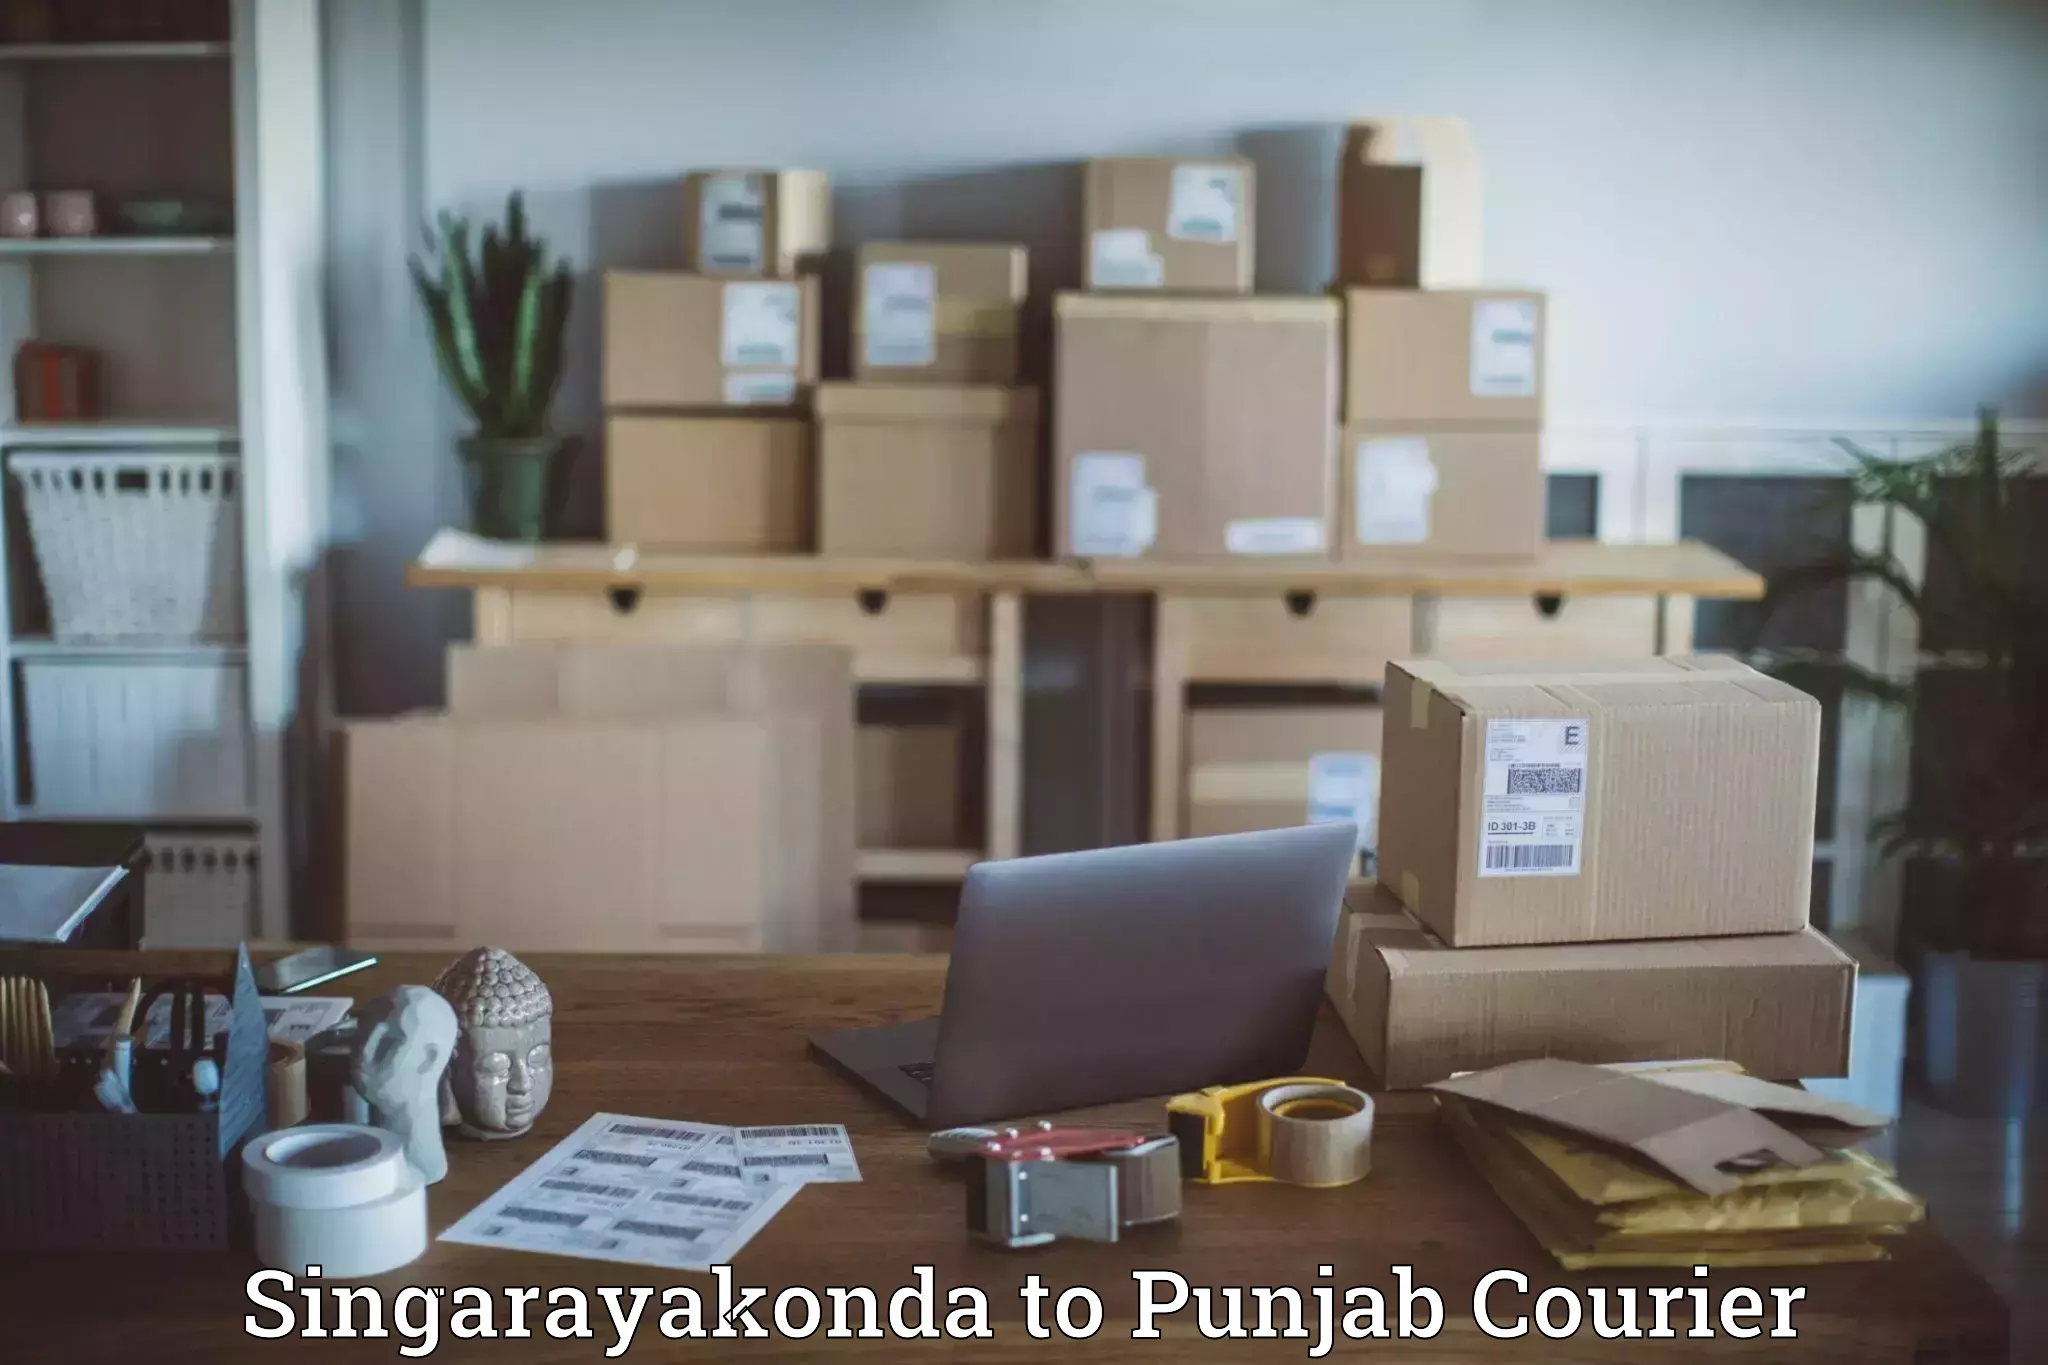 State-of-the-art courier technology Singarayakonda to Punjab